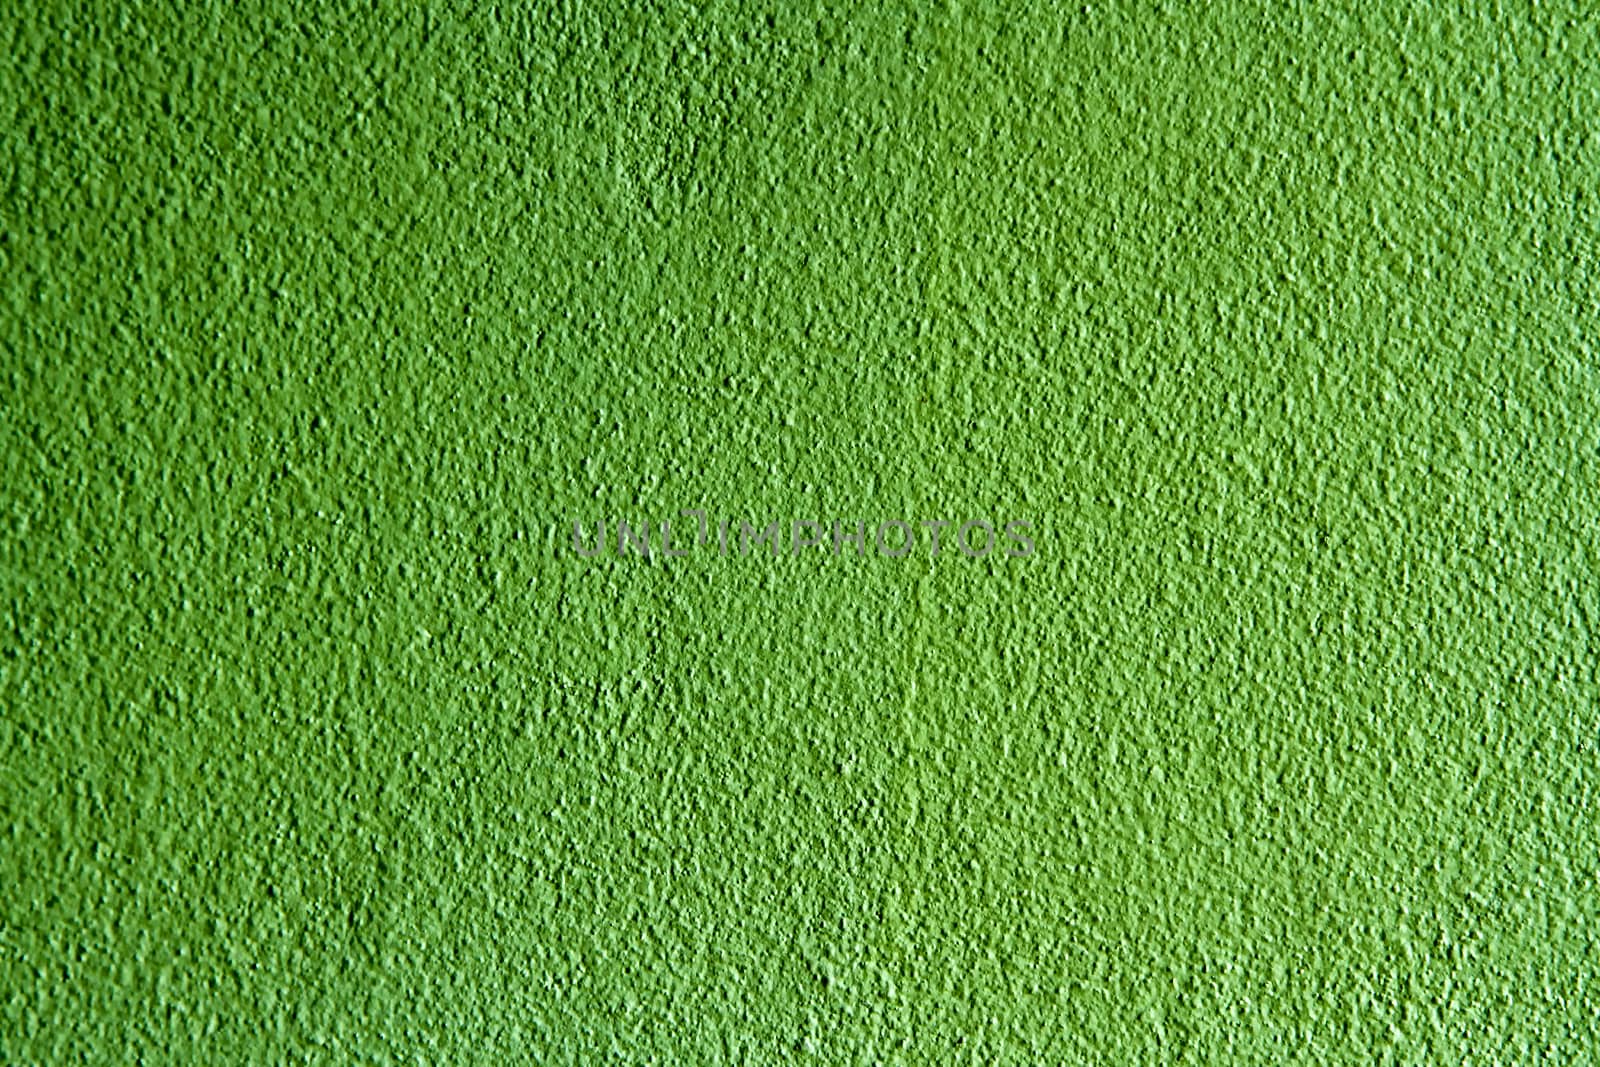 Green cement floor dark for background